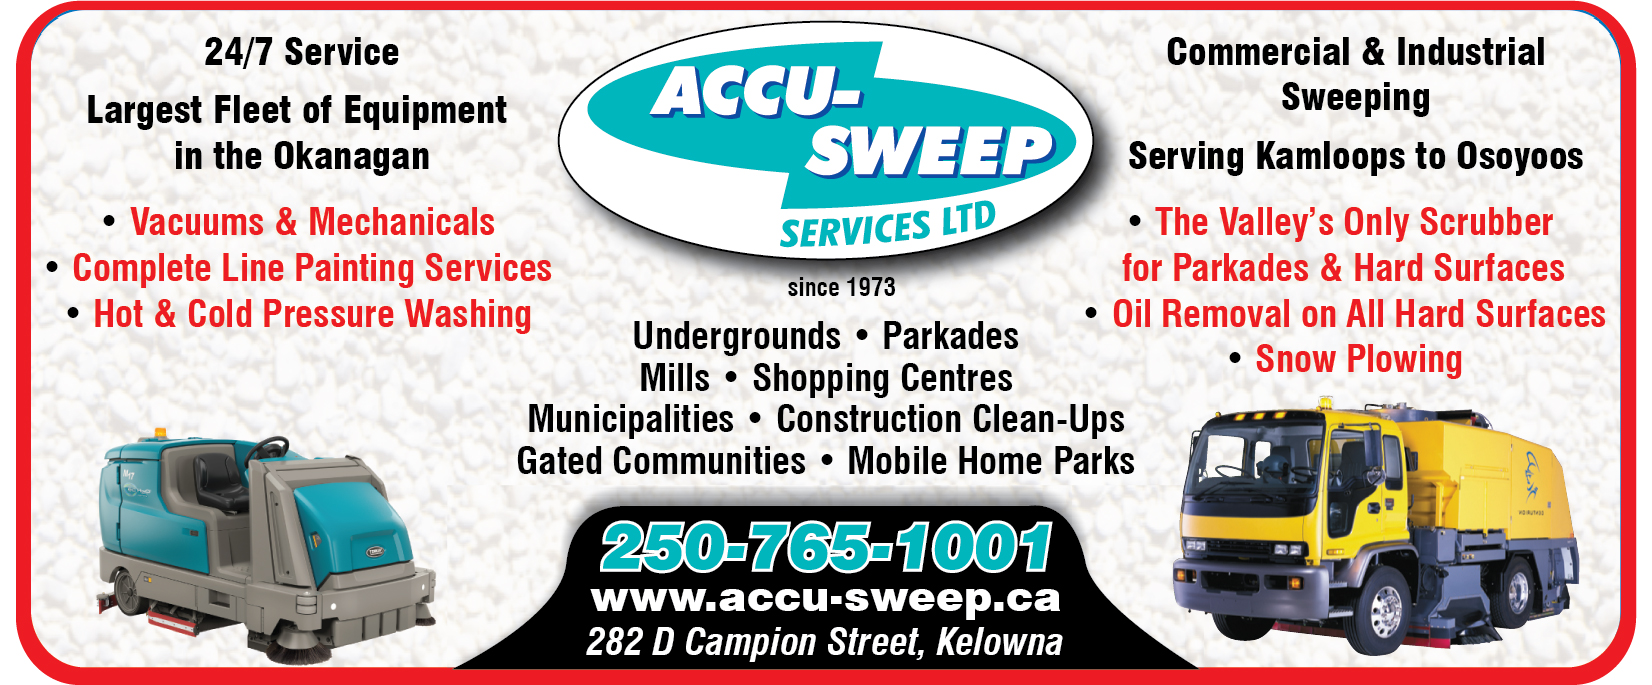 Accu-Sweep Services Ltd